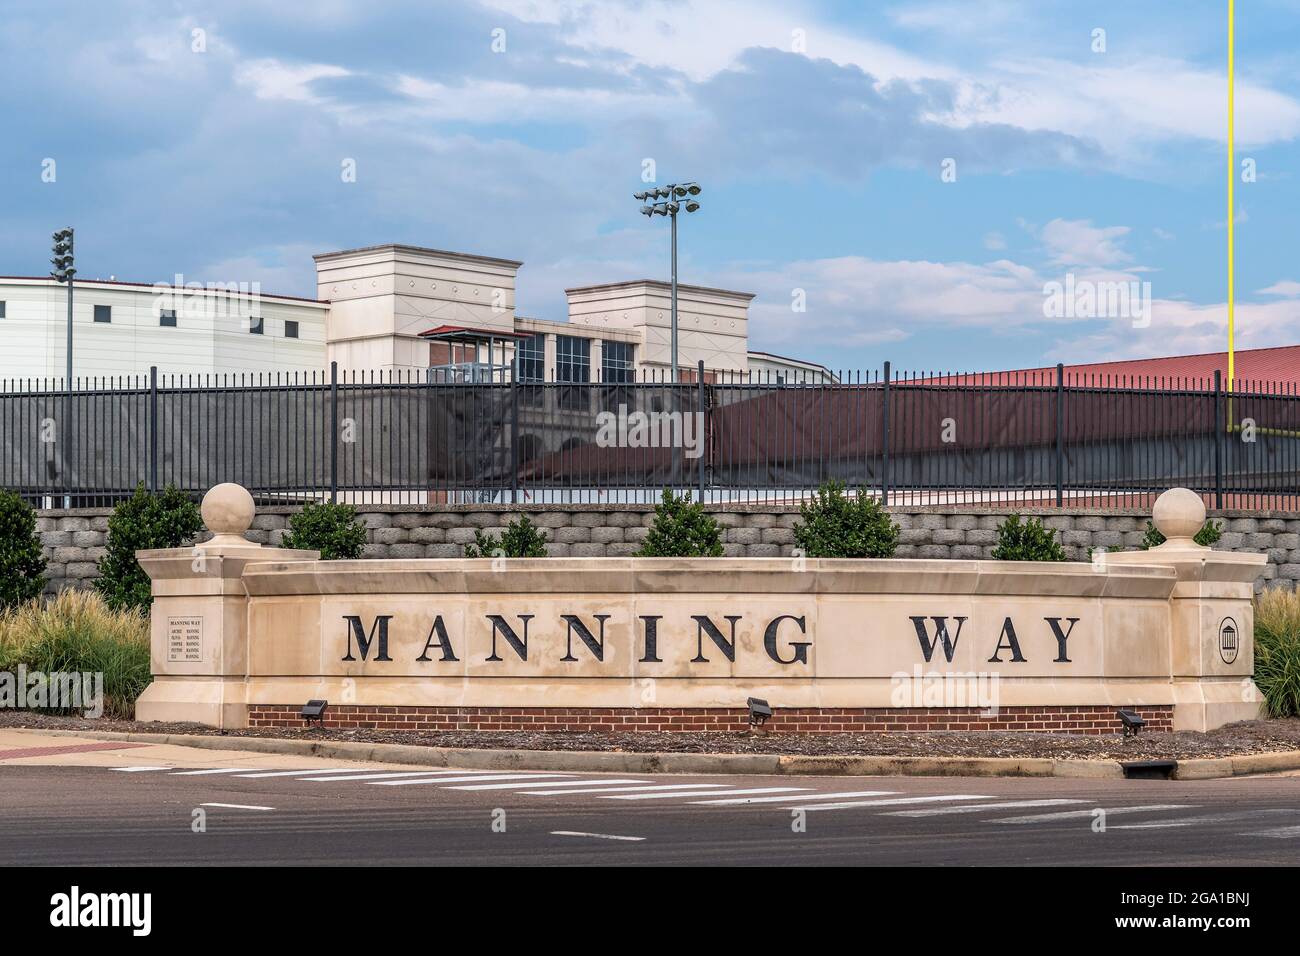 Ole Miss Football Vaught Hemingway Stadium, Heimstadion der Ole Miss Rebels am Manning Way an der University of Mississippi, Oxford, MS, USA. Stockfoto